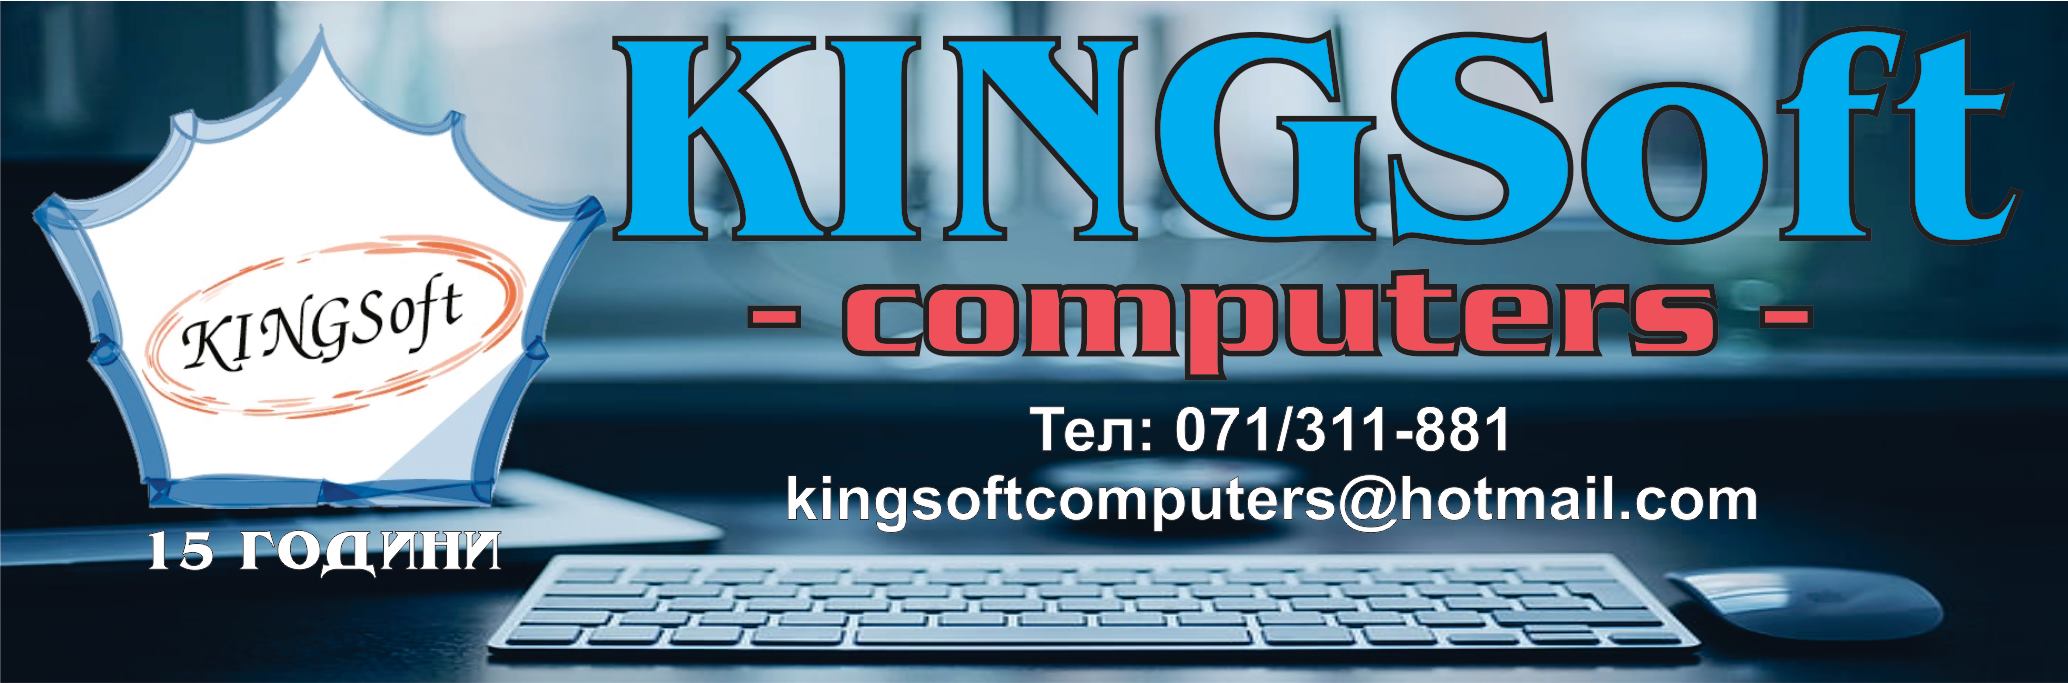 Kingsoft_official